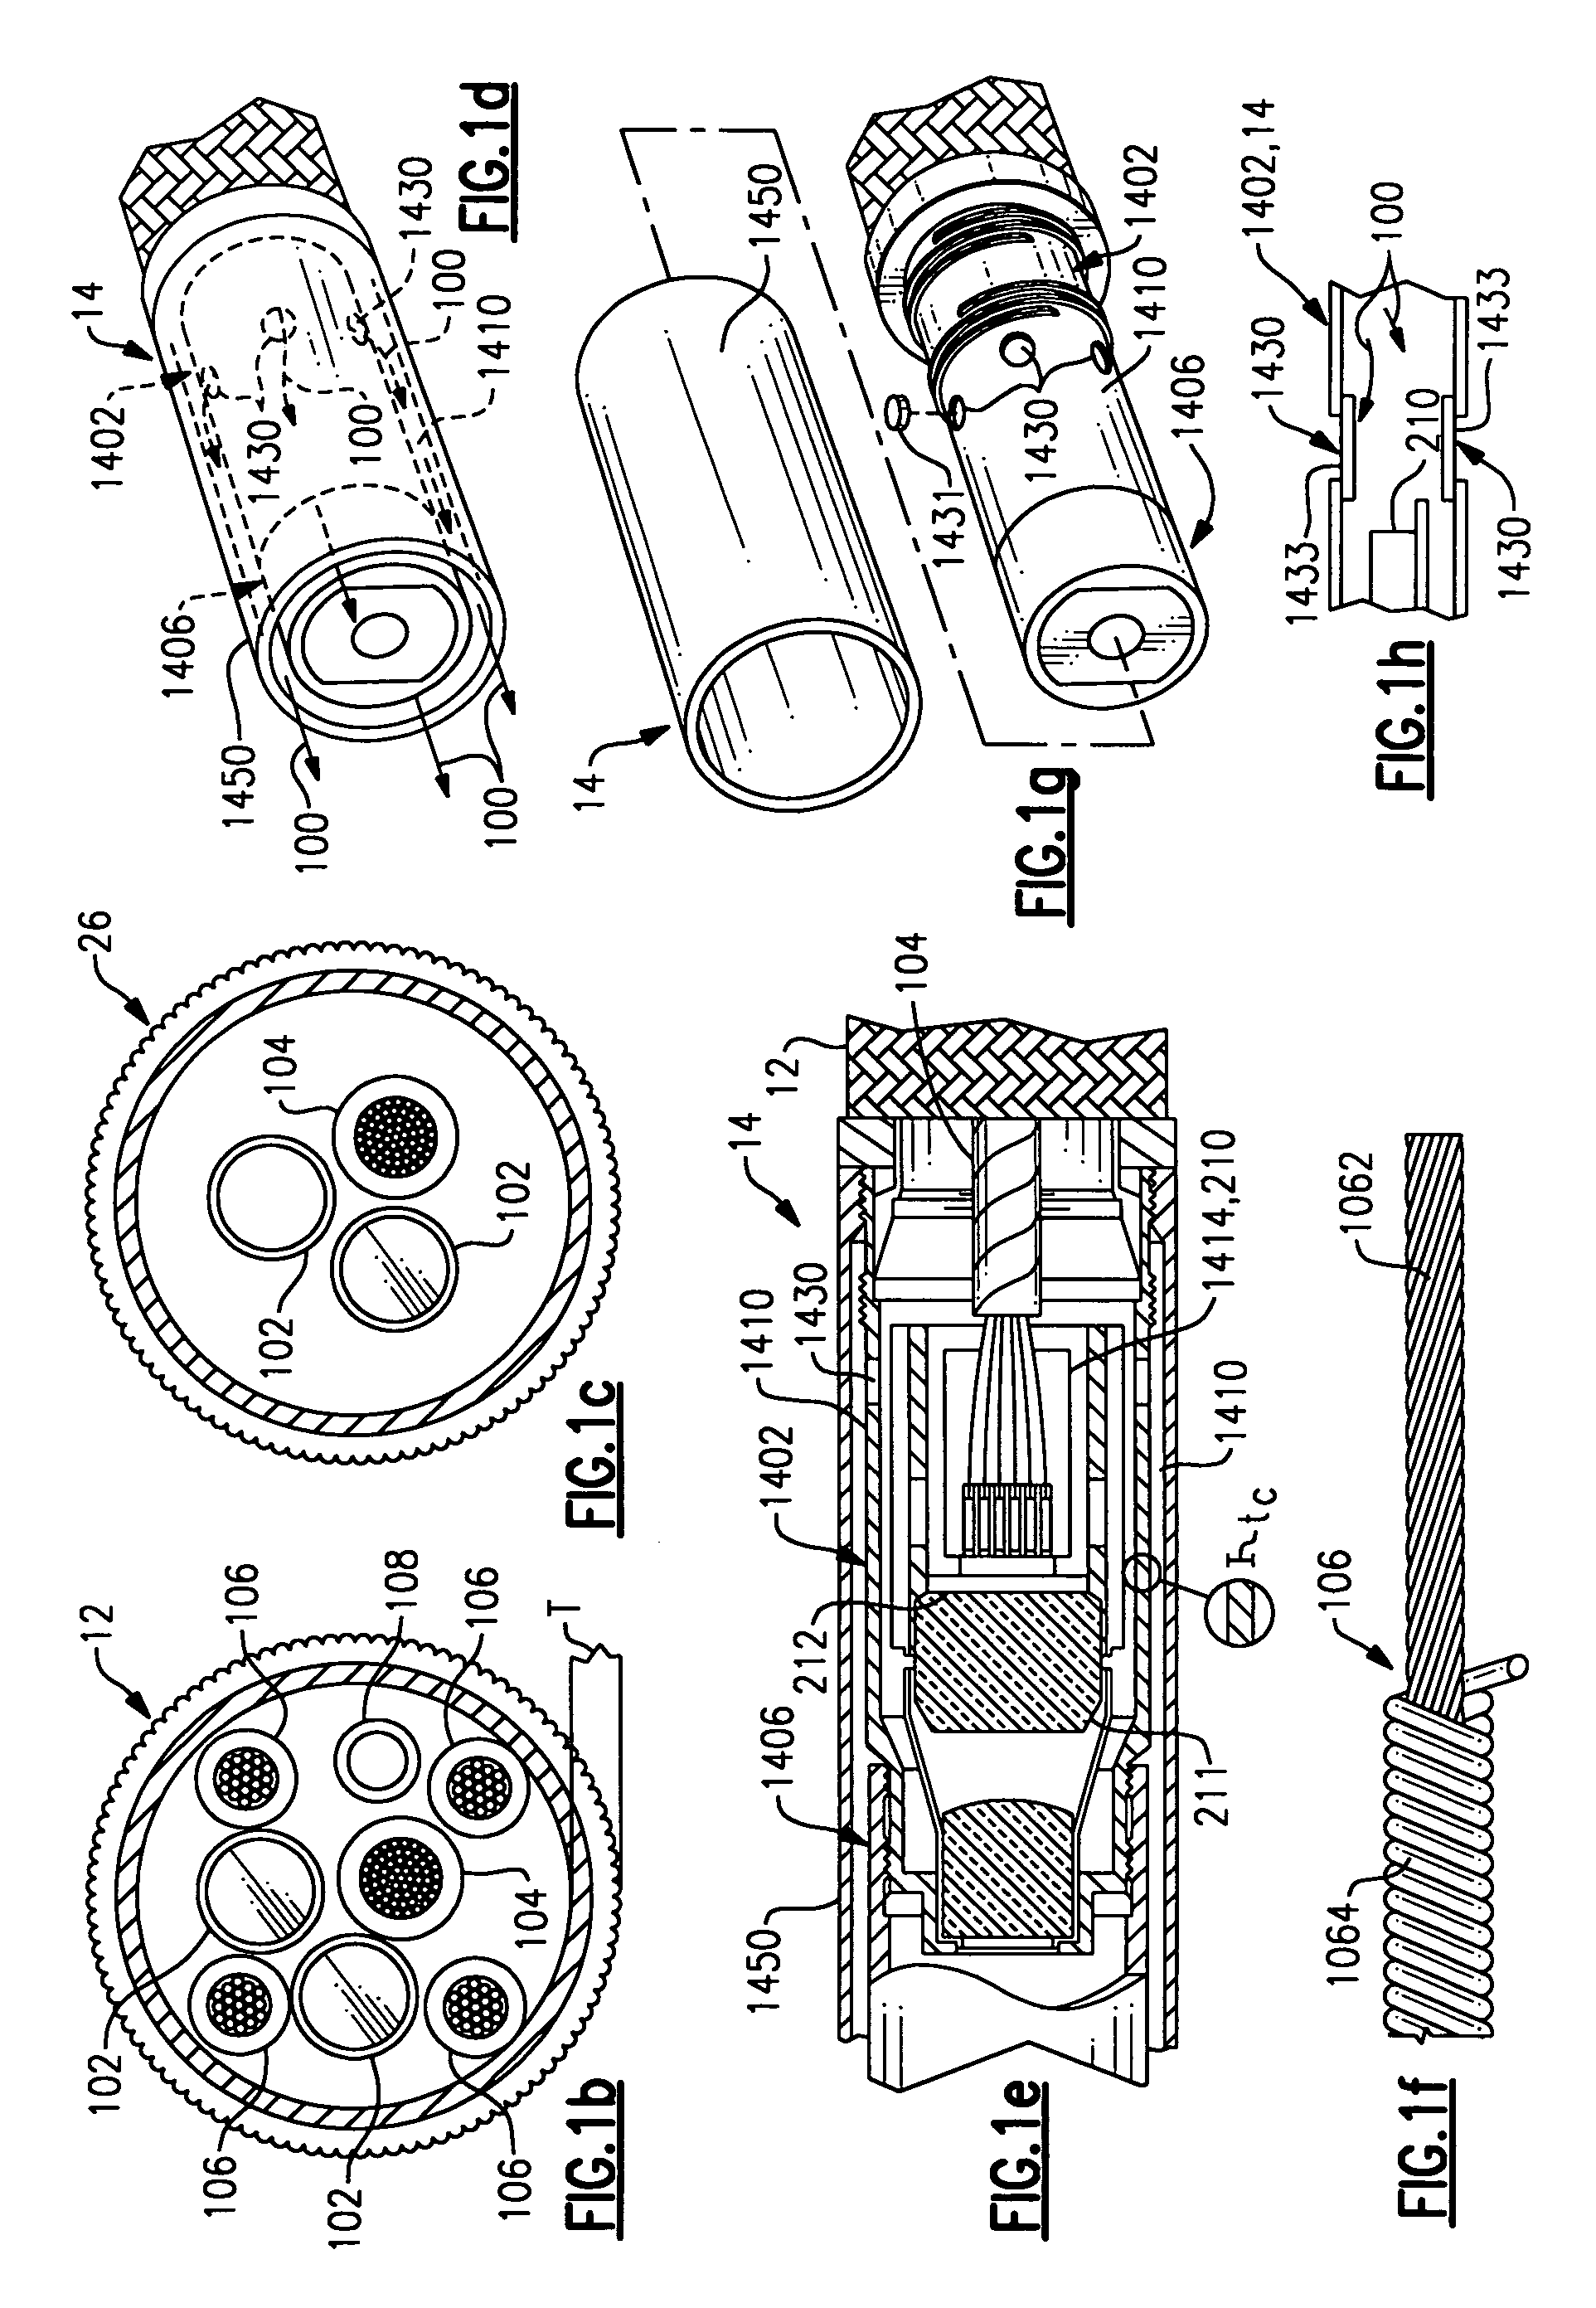 Borescope comprising fluid supply system